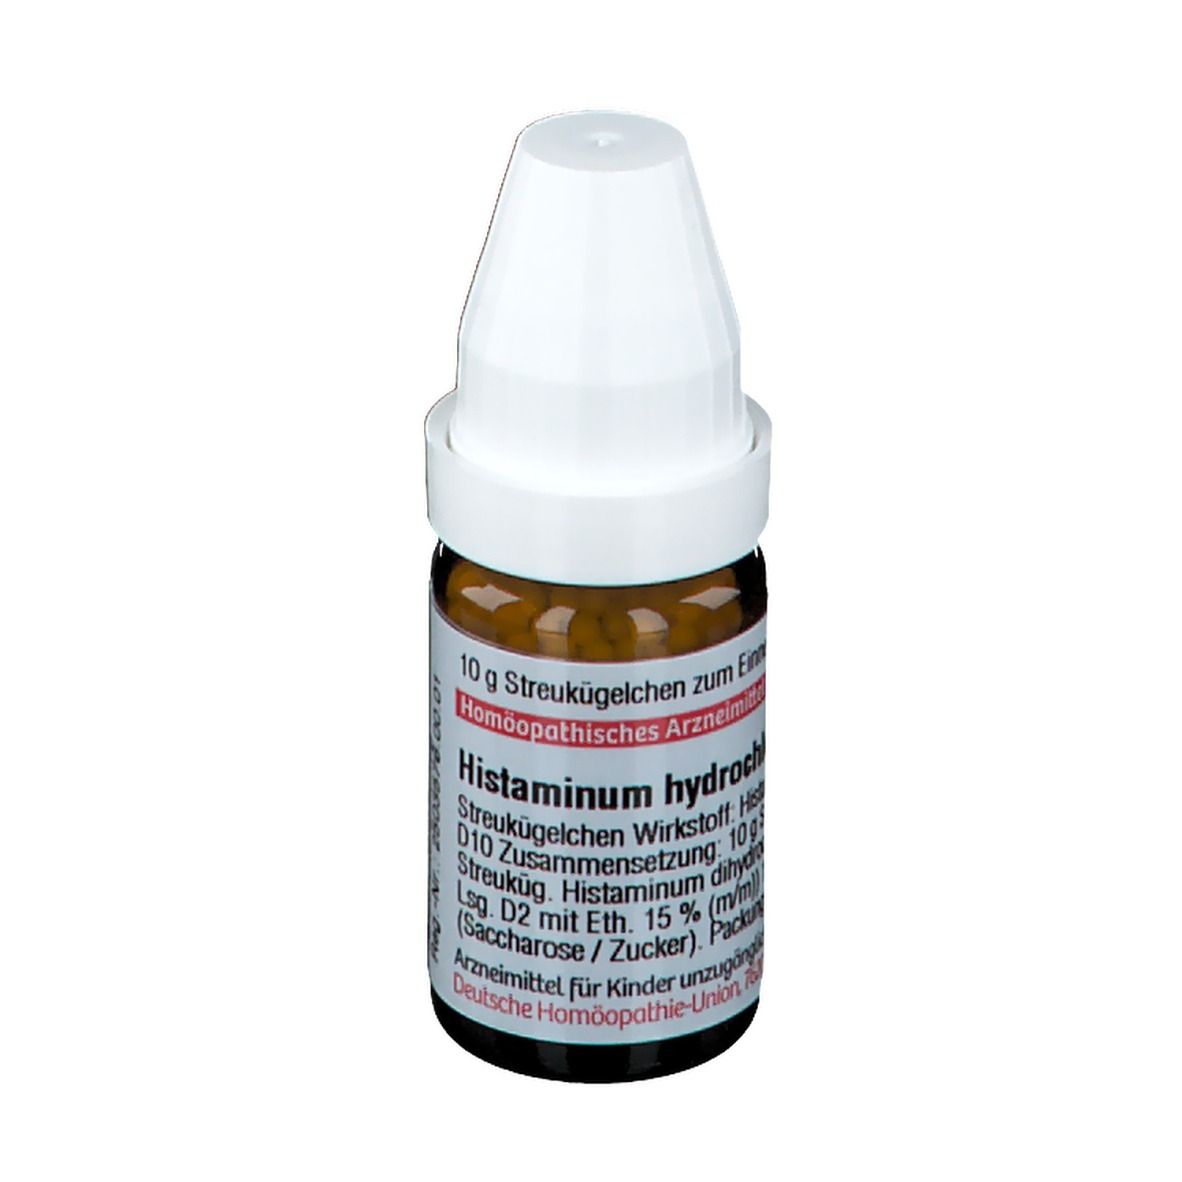 DHU Histaminum Hydrochloricum D10